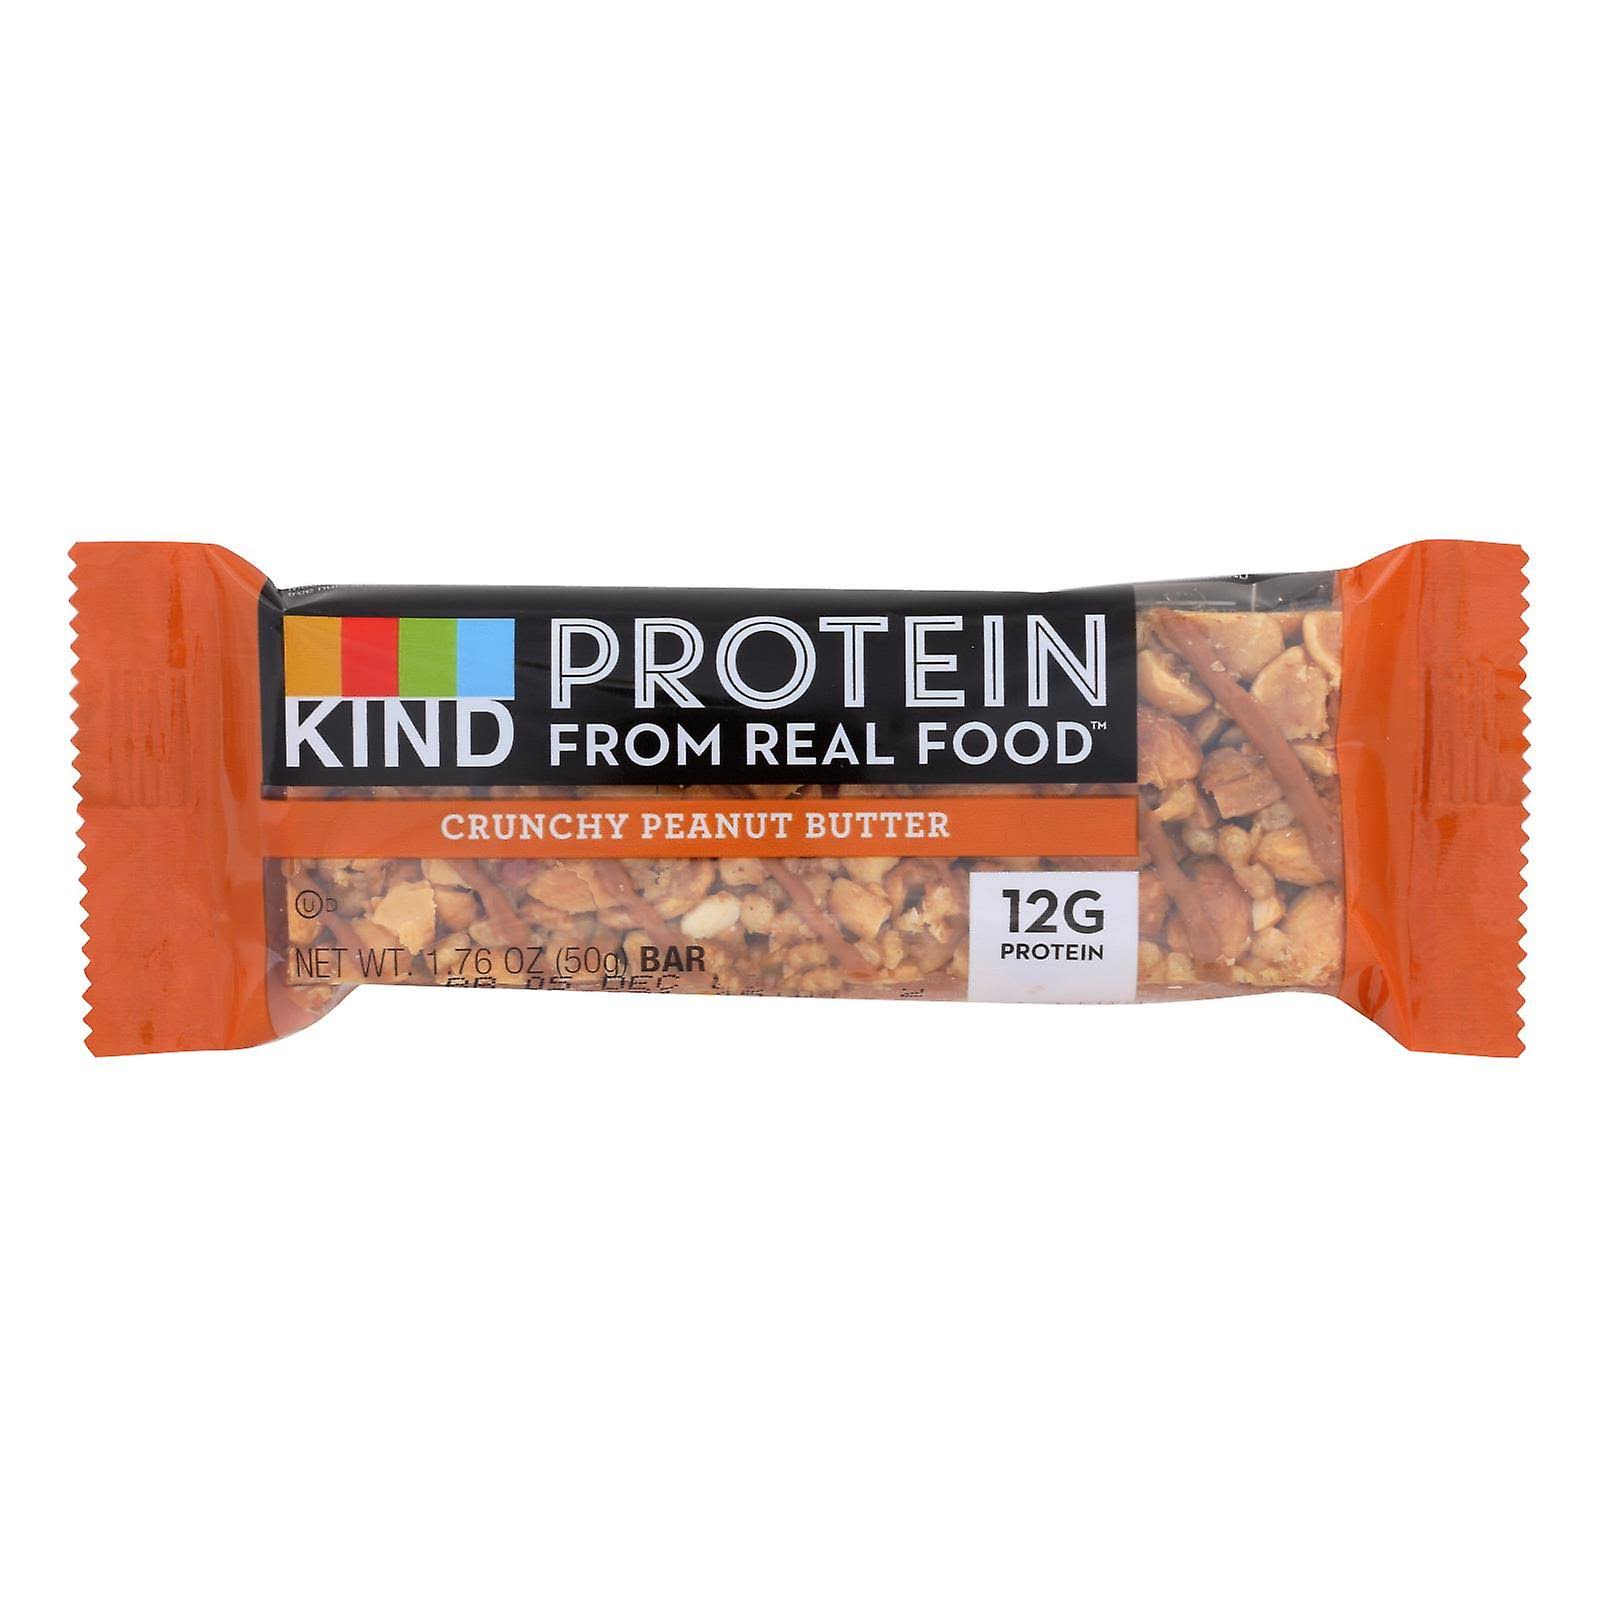 Kind Protein Bar - Crunchy Peanut Butter, 1.76oz